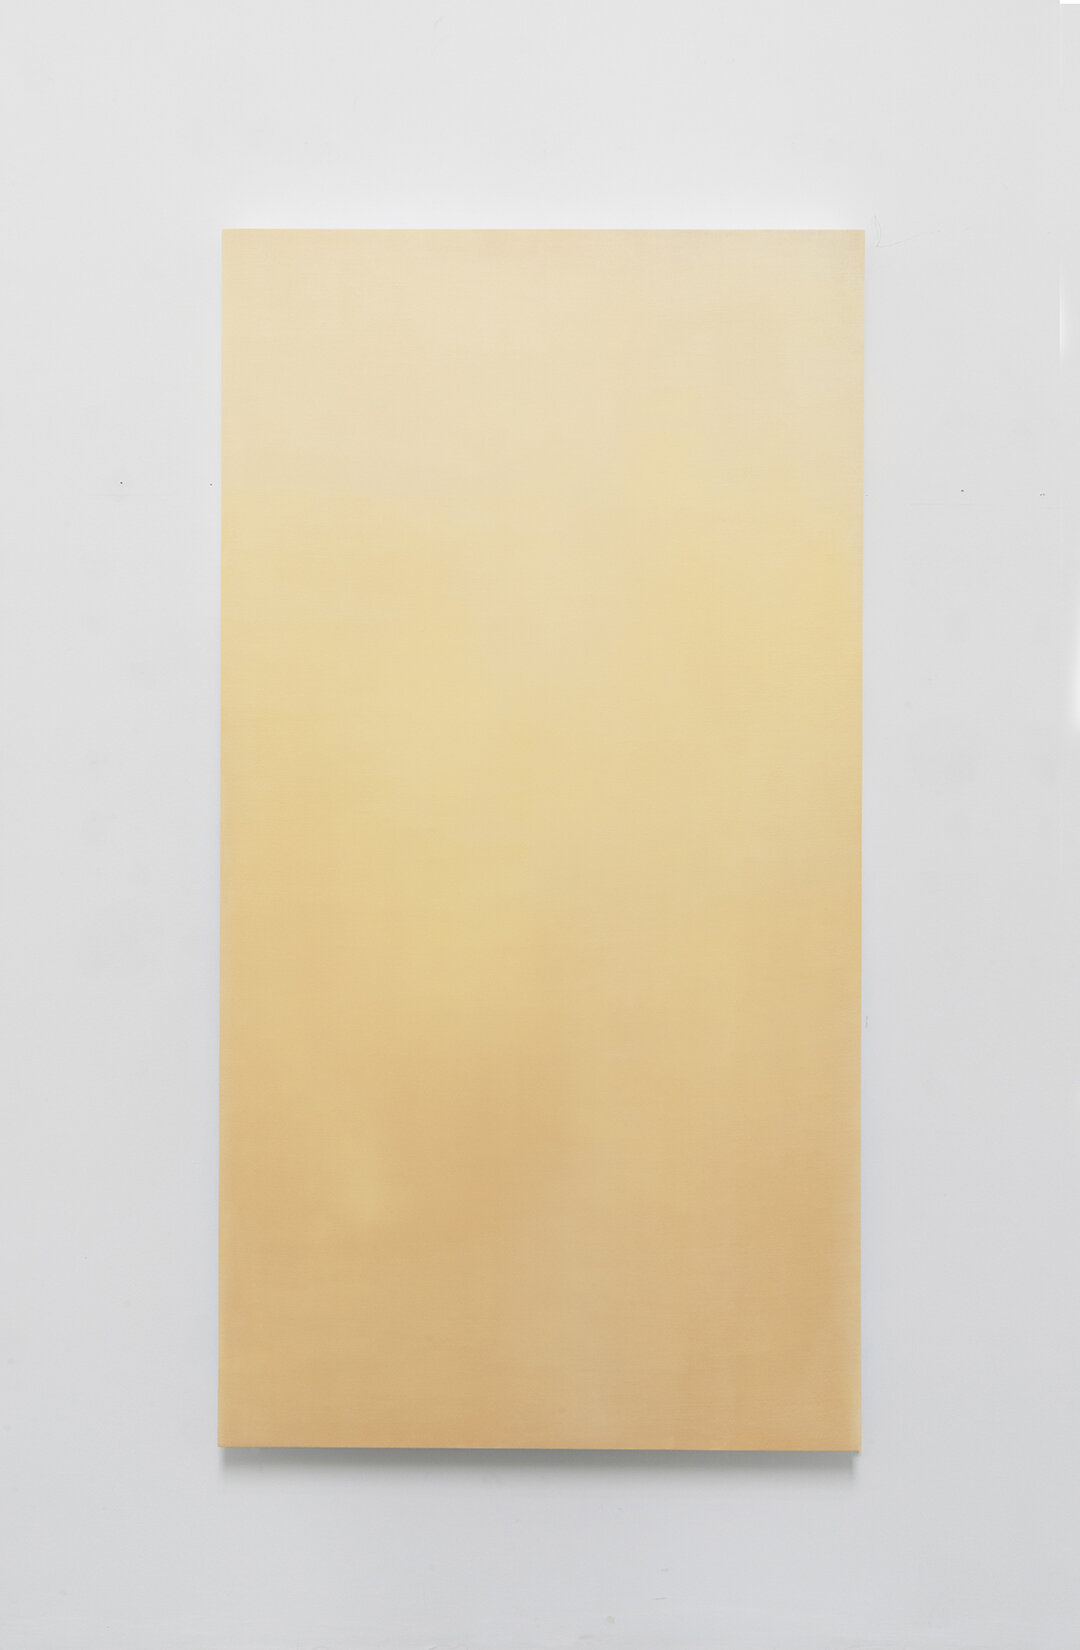 Scatter Light, 2020, Oil on Linen, 71 x 36 inches